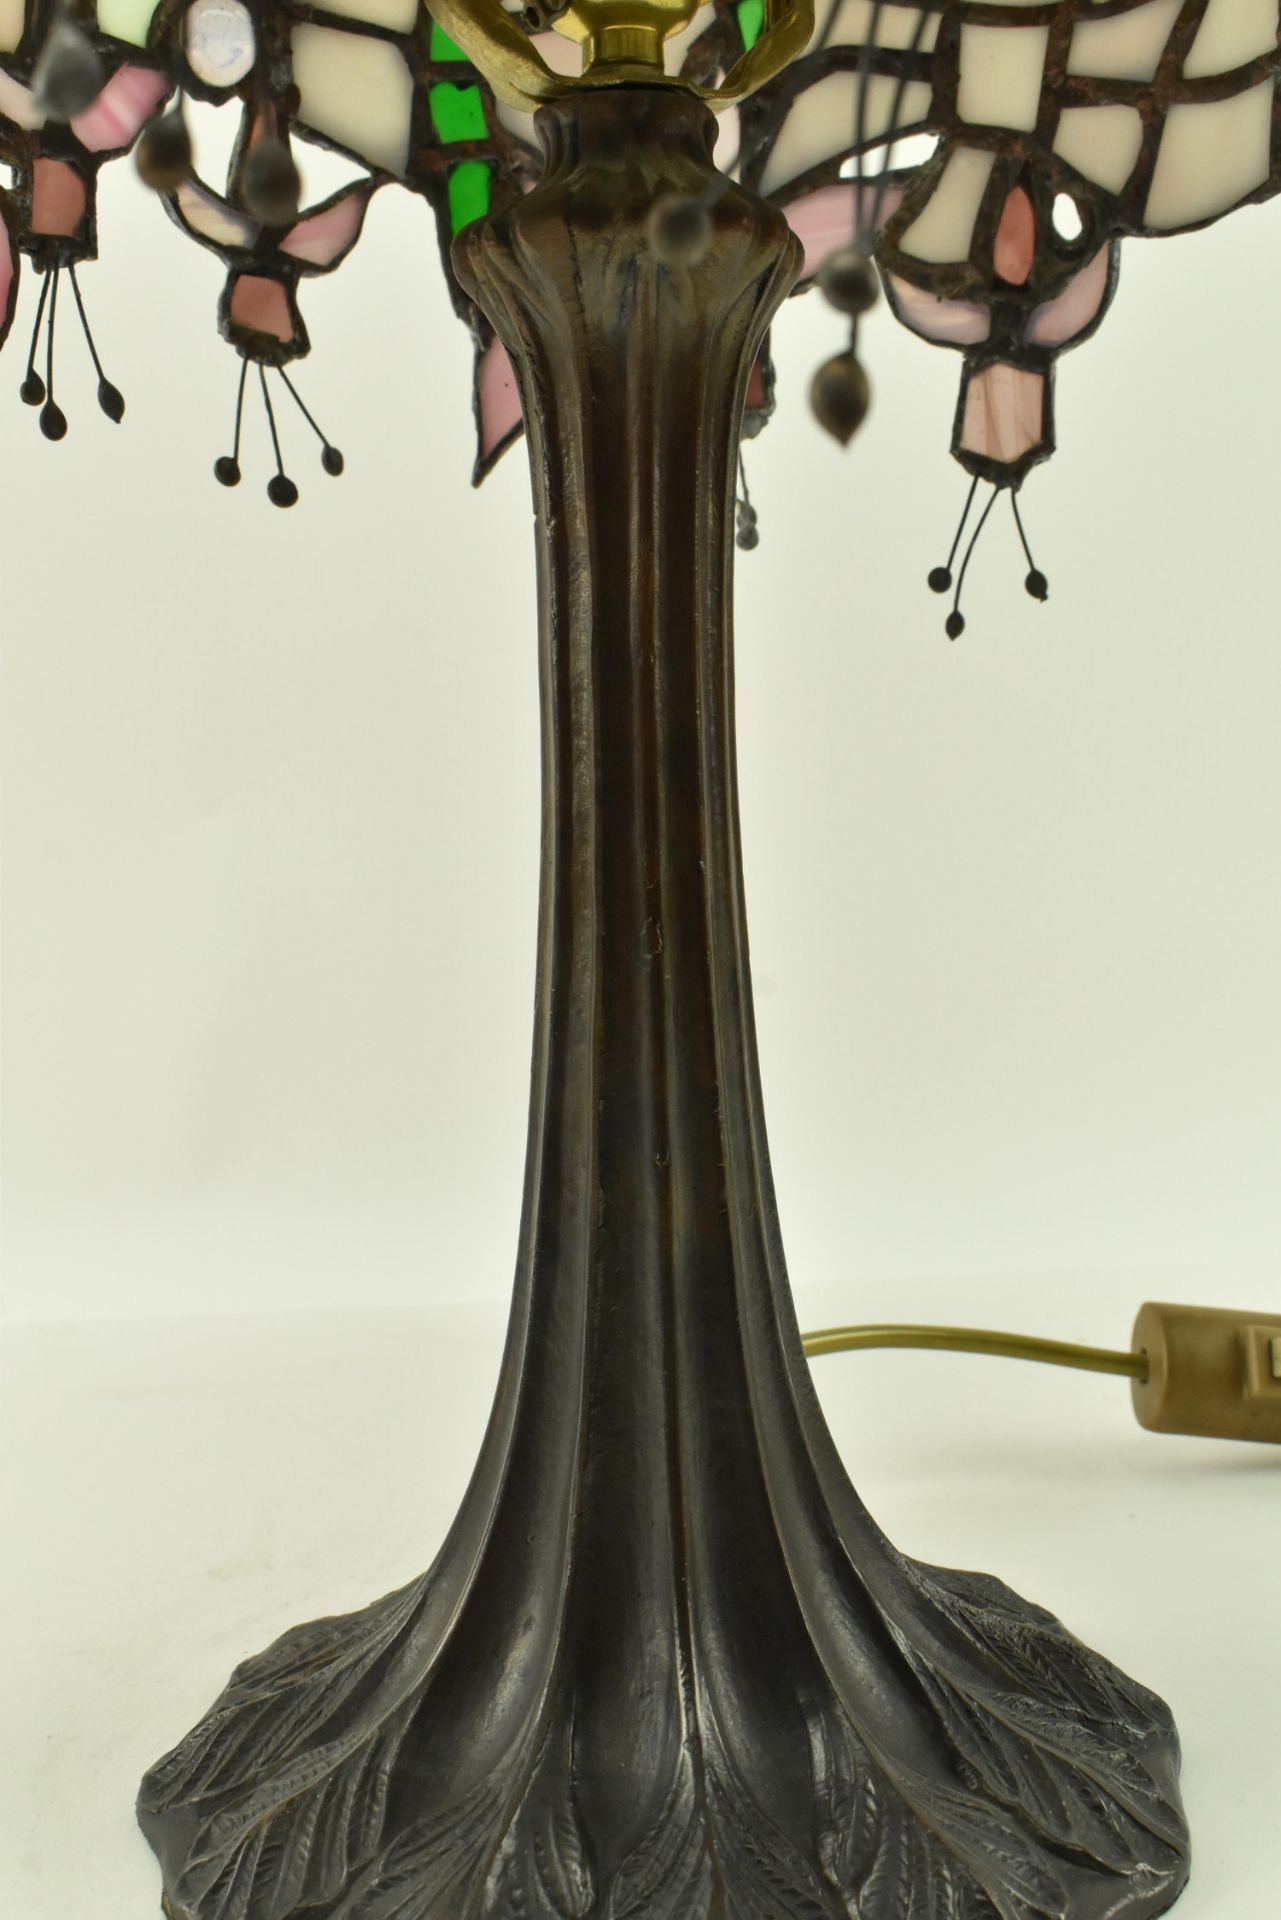 JOHN LEATHWOOD - STAINED LEADED GLASS TIFFANY STYLE DESK LAMP - Image 5 of 8